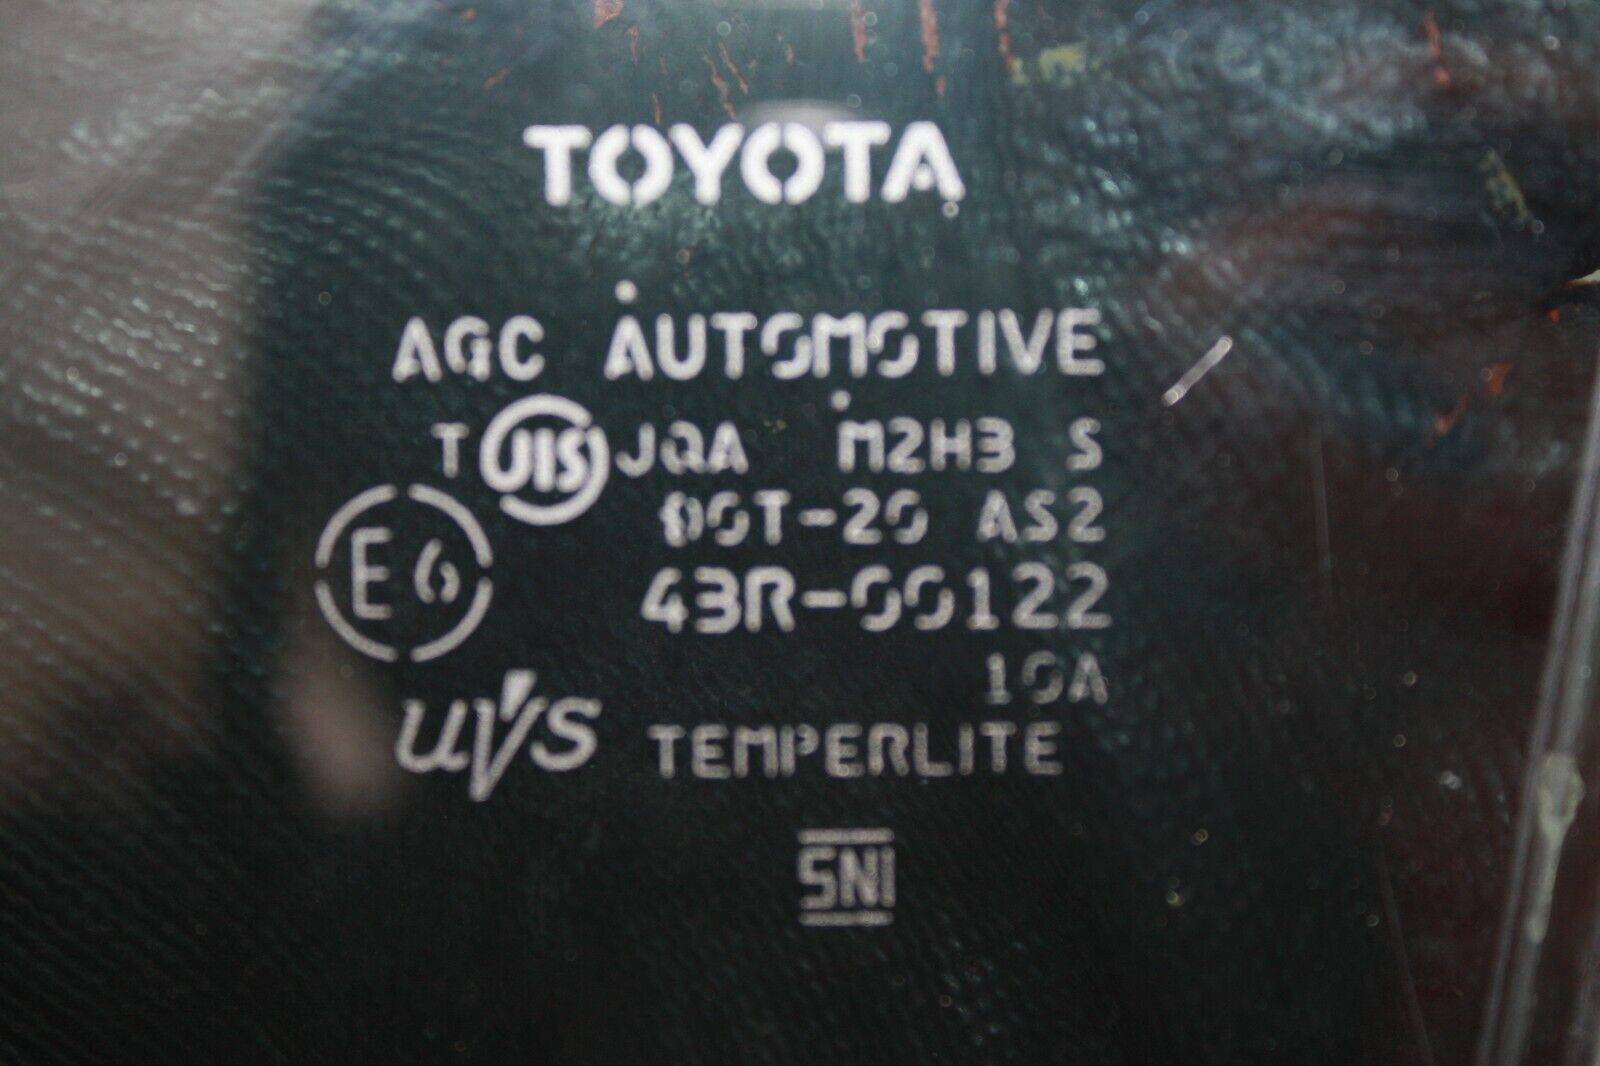 Toyota-Prius-MK3-Rear-Left-Door-Glass-Window-43R-00122-Genuine-175864963583-3